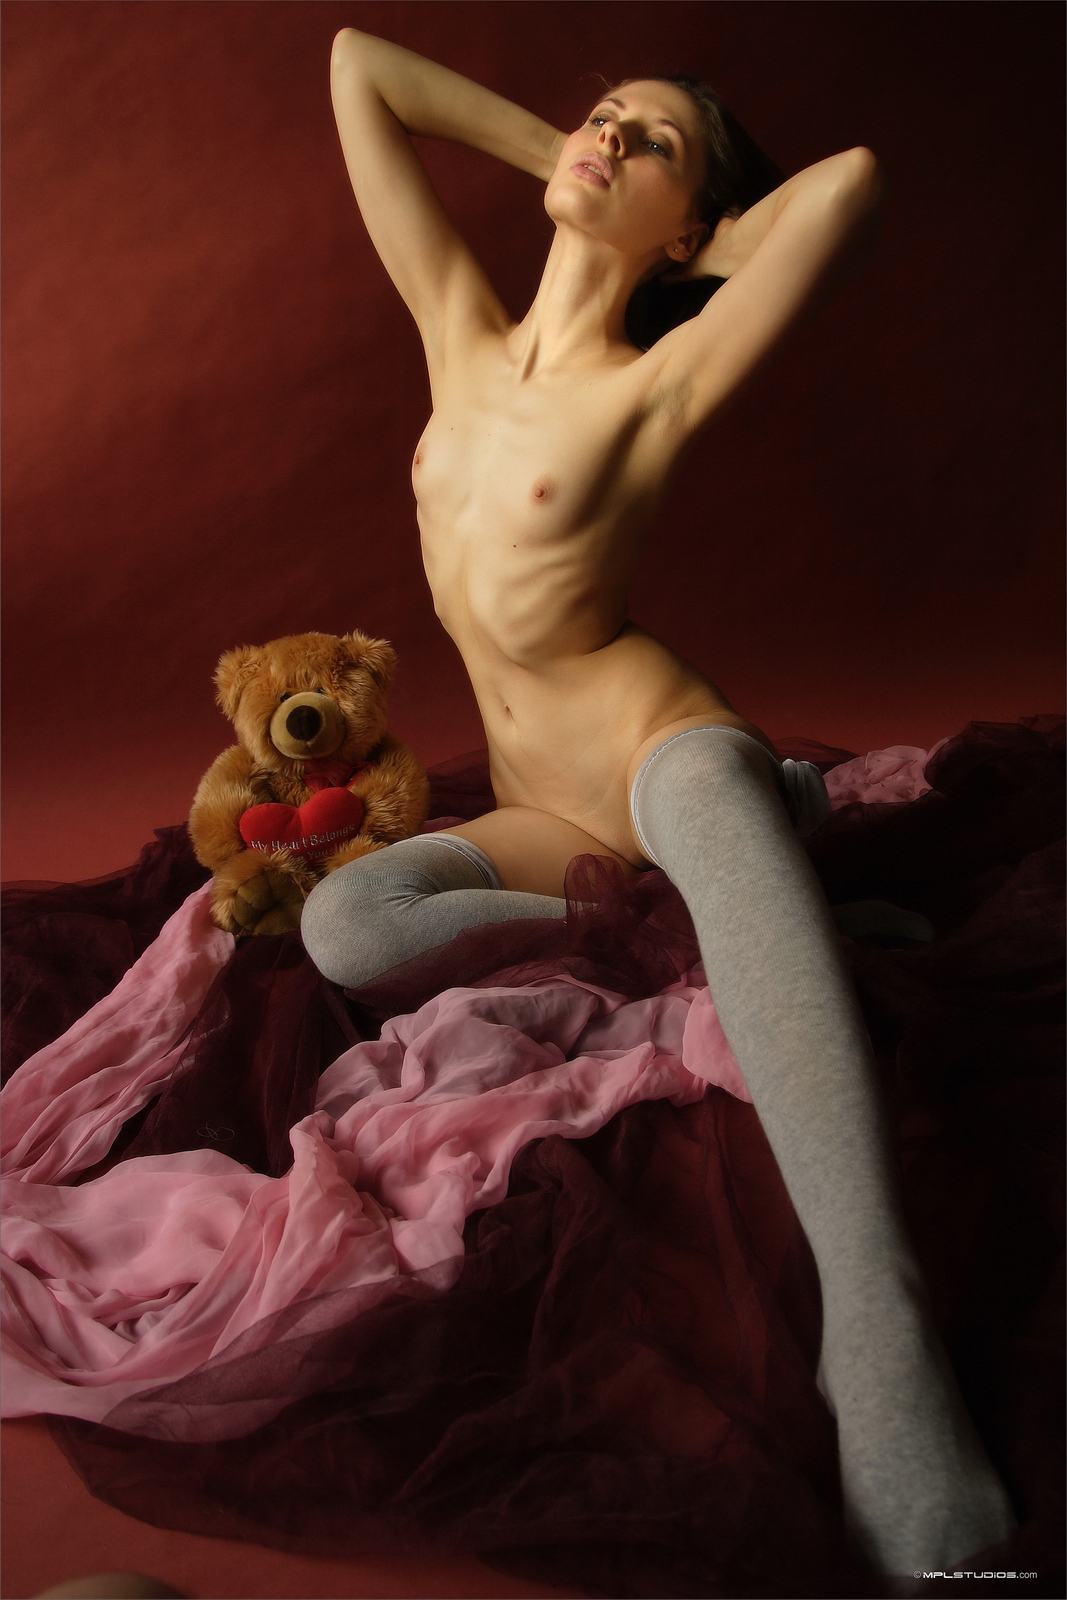 liala-naked-with-teddy-bear-skinny-girl-mplstudios-11